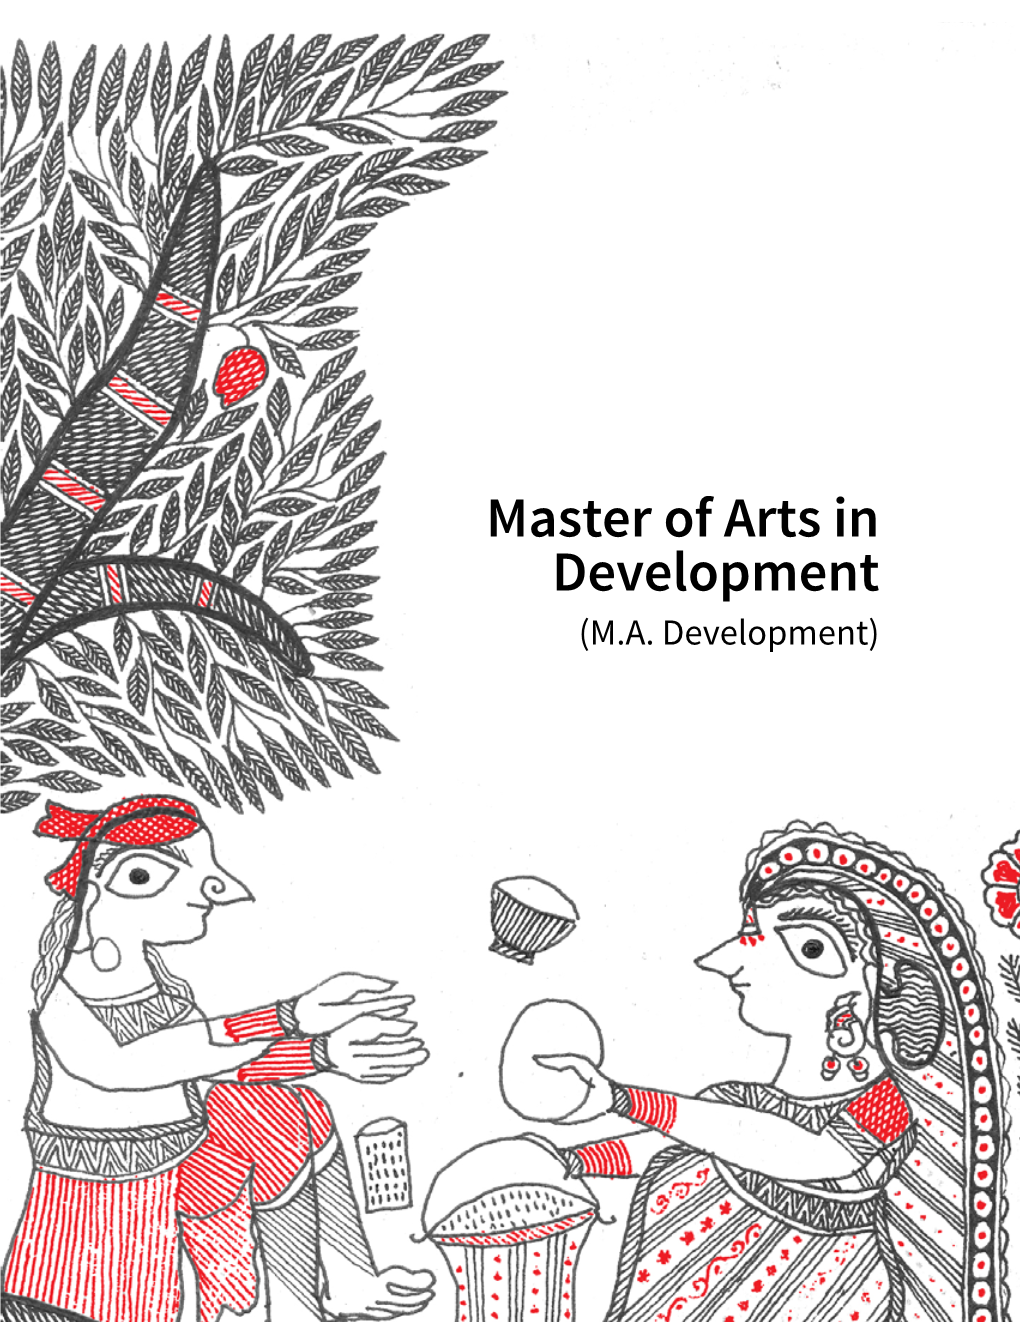 Master of Arts in Development (M.A